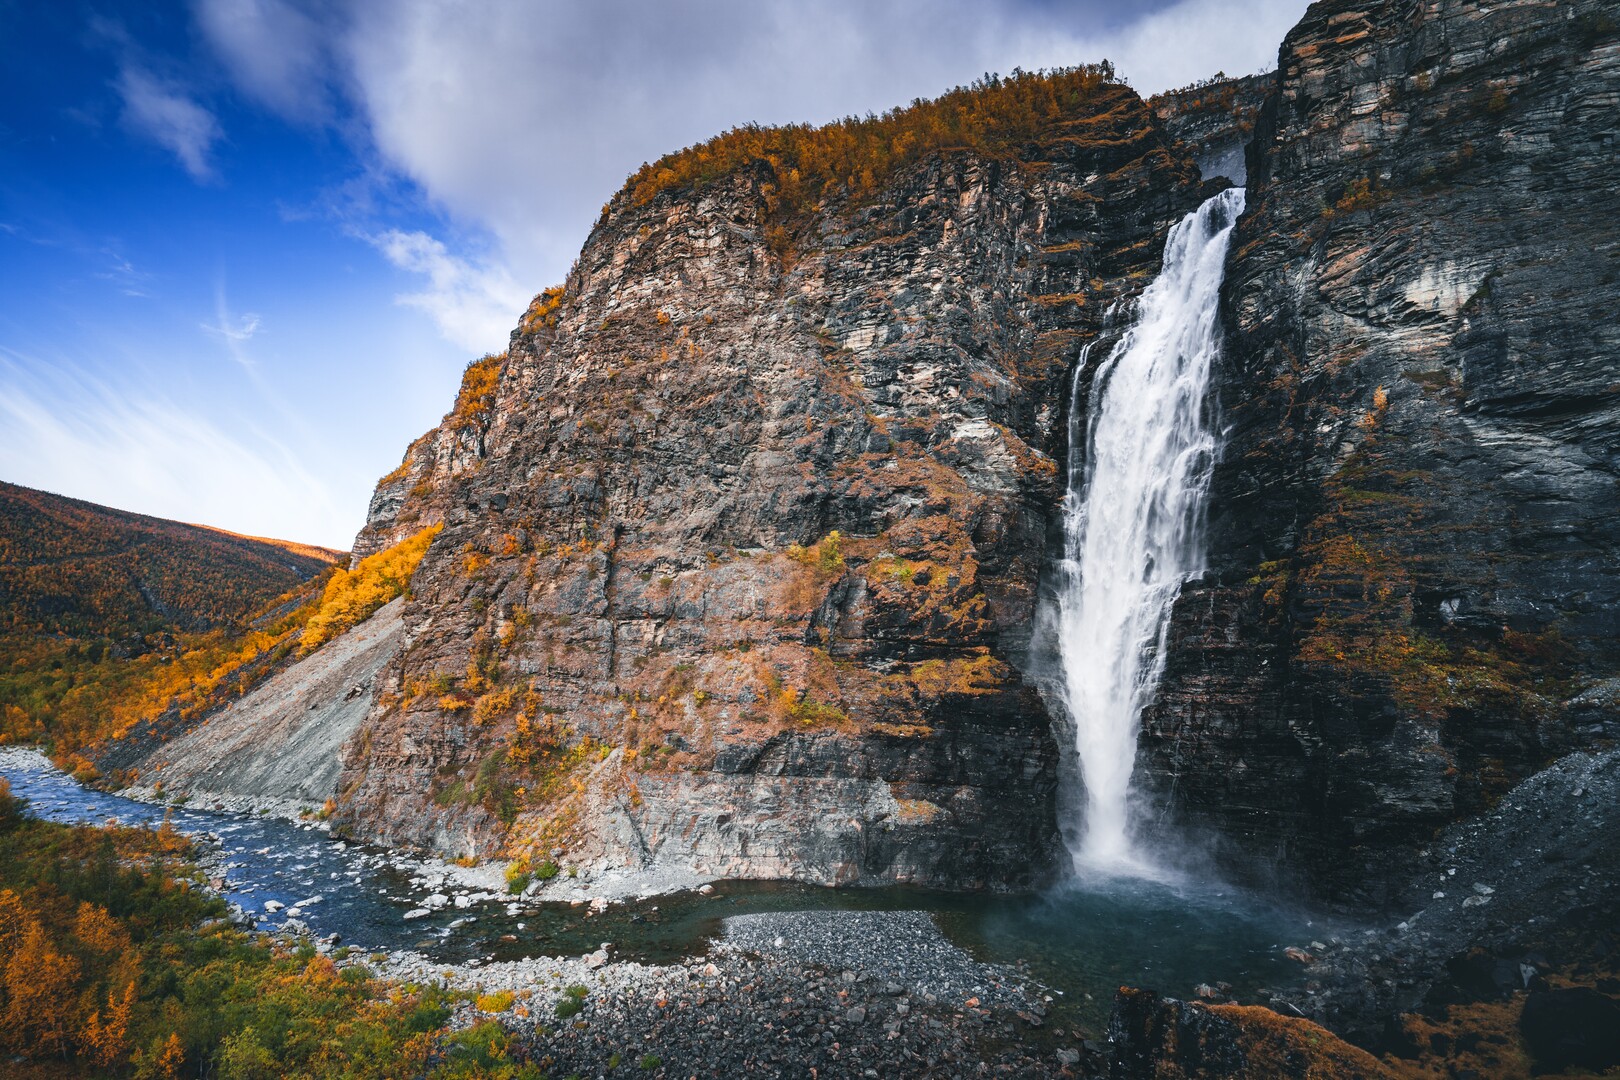 The Mollisfossen waterfall drops 269 metres into the Reisadalen valley © Petr Pavlíček